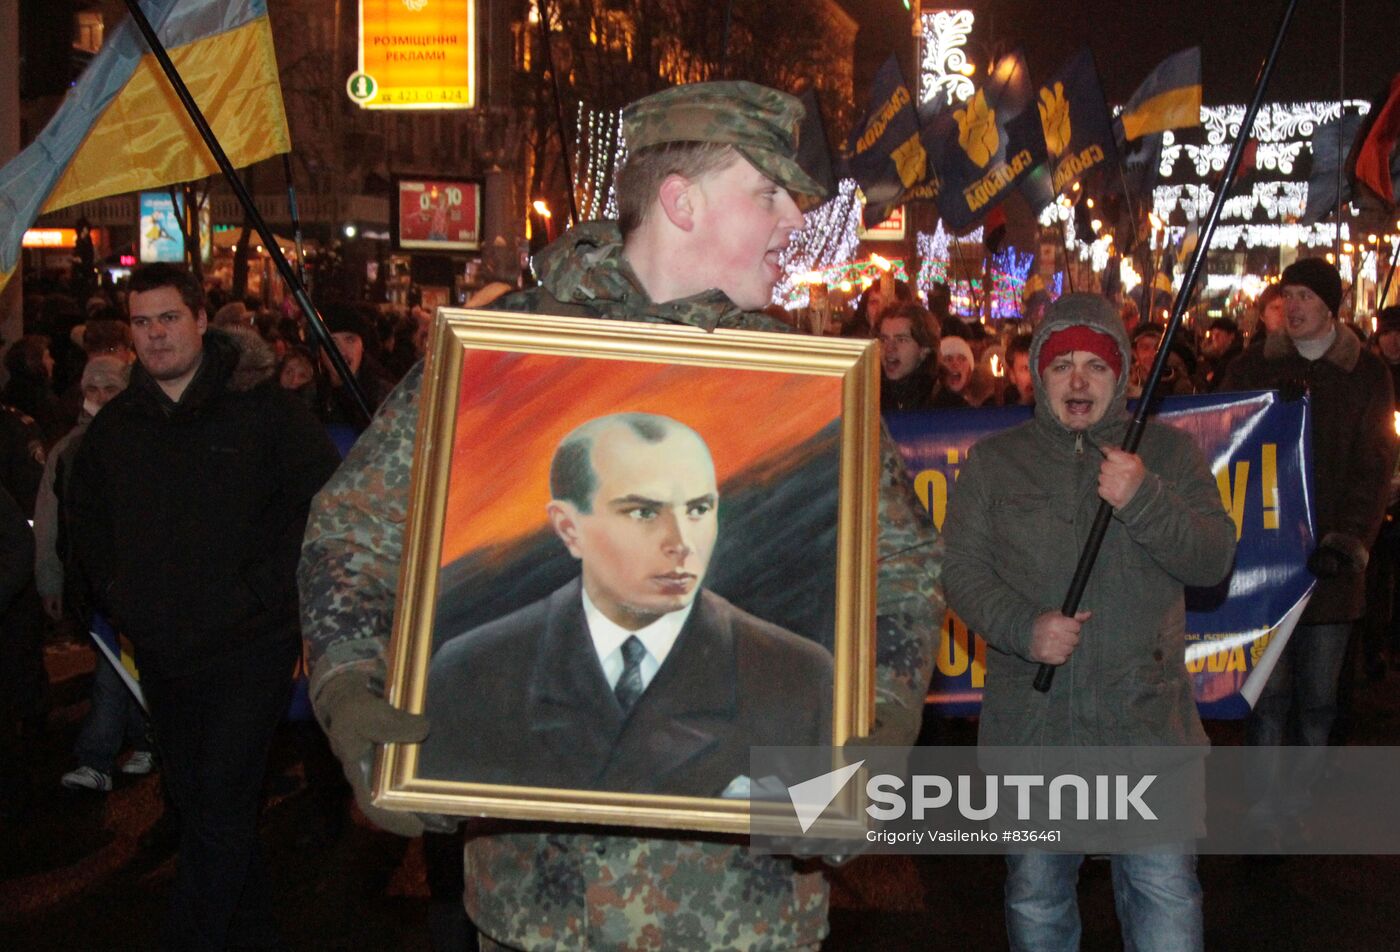 Torchlight procession to commemorate birth of Stepan Bandera